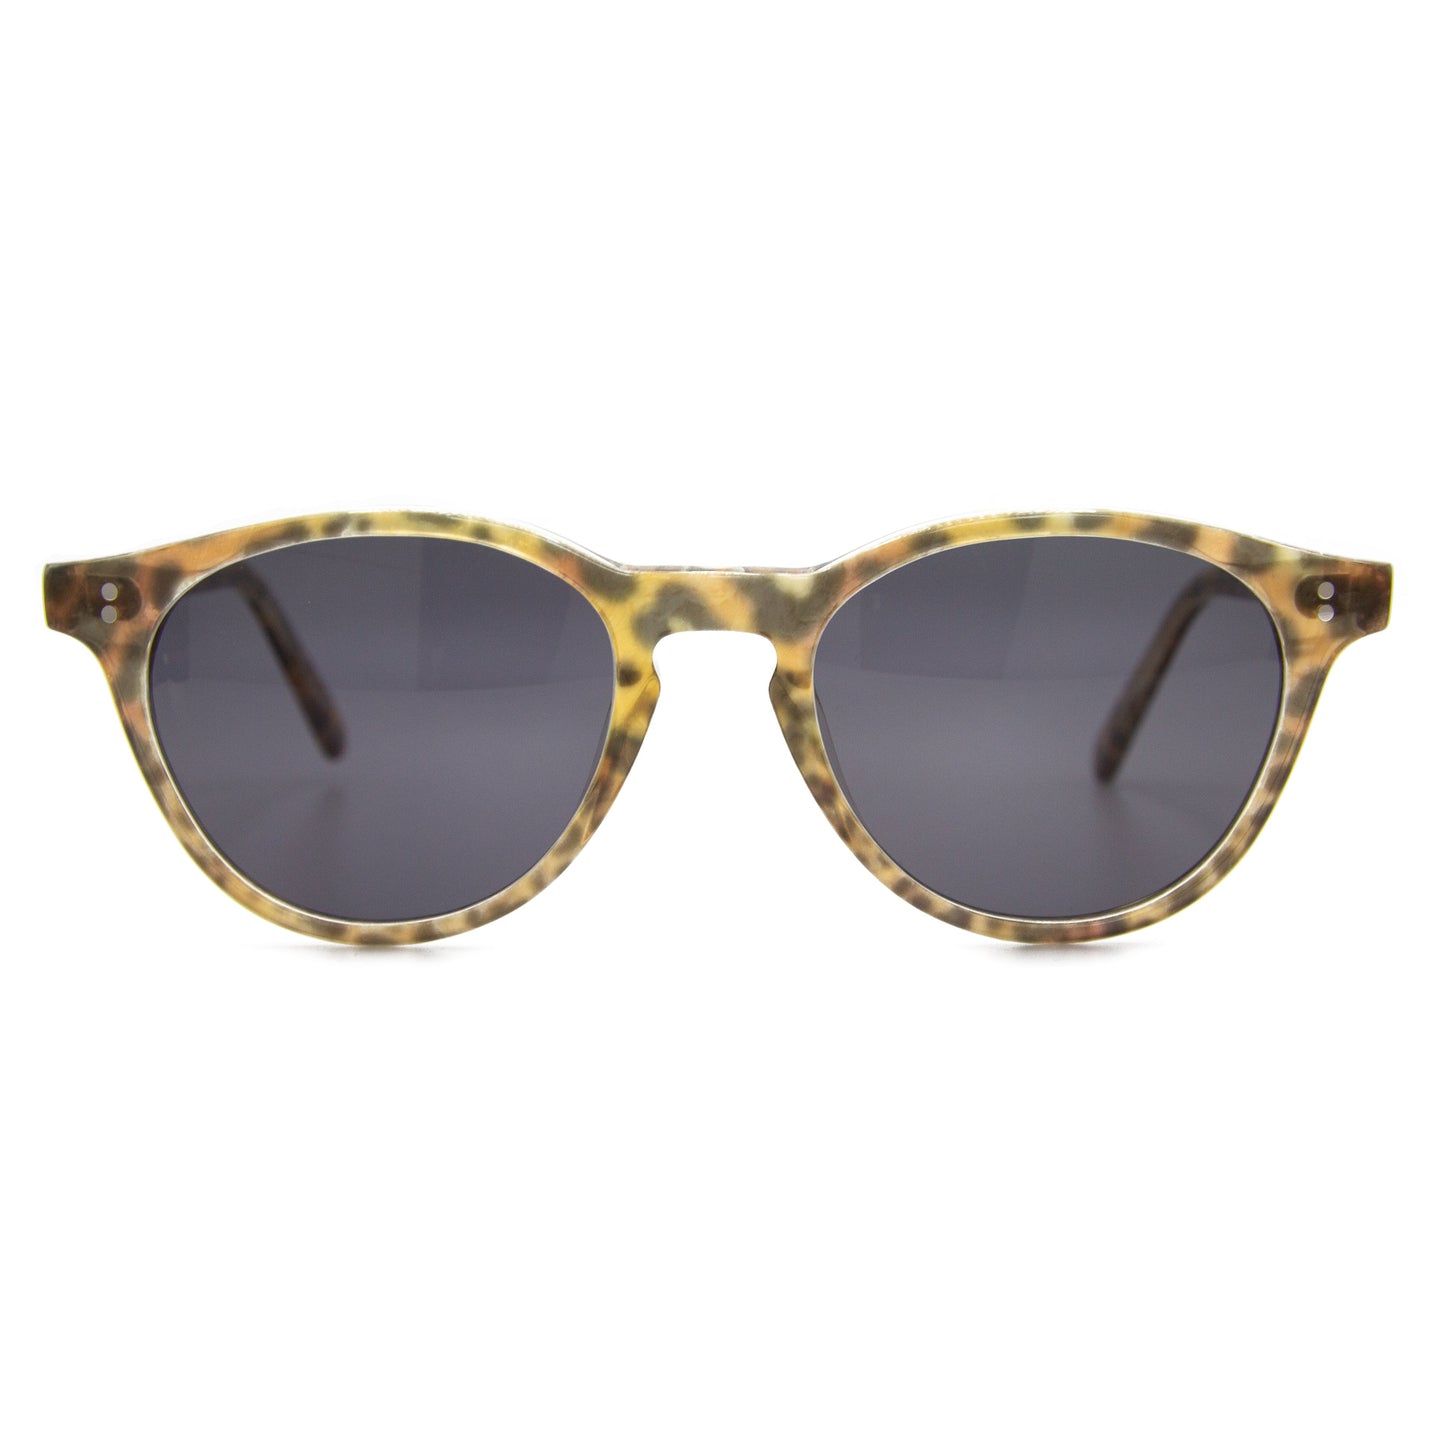 3 brothers - Chantal - Leopard - Prescription Sunglasses